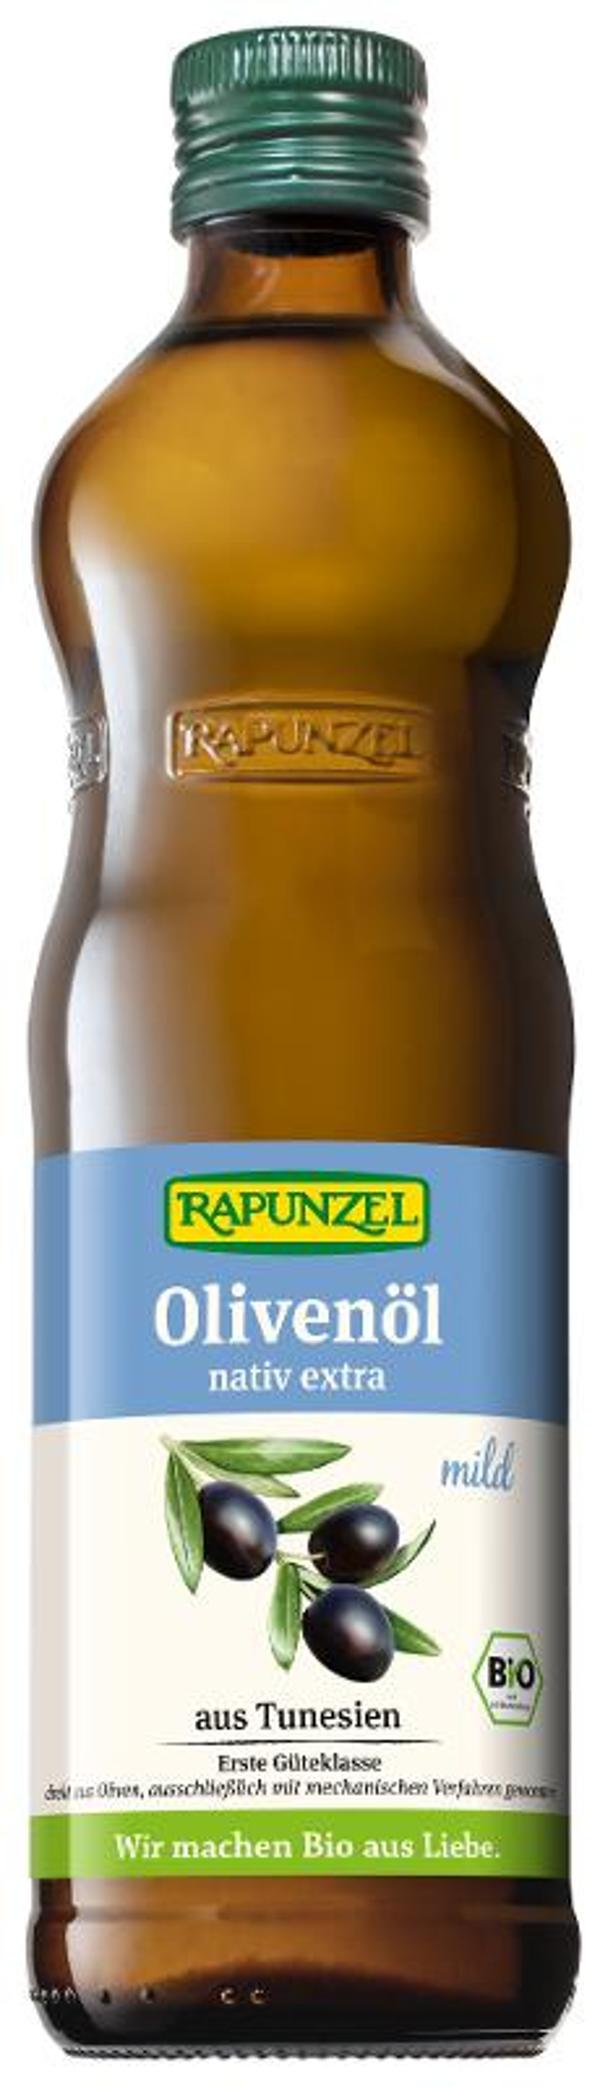 Produktfoto zu Olivenöl mild ,na tiv extra 500 ml